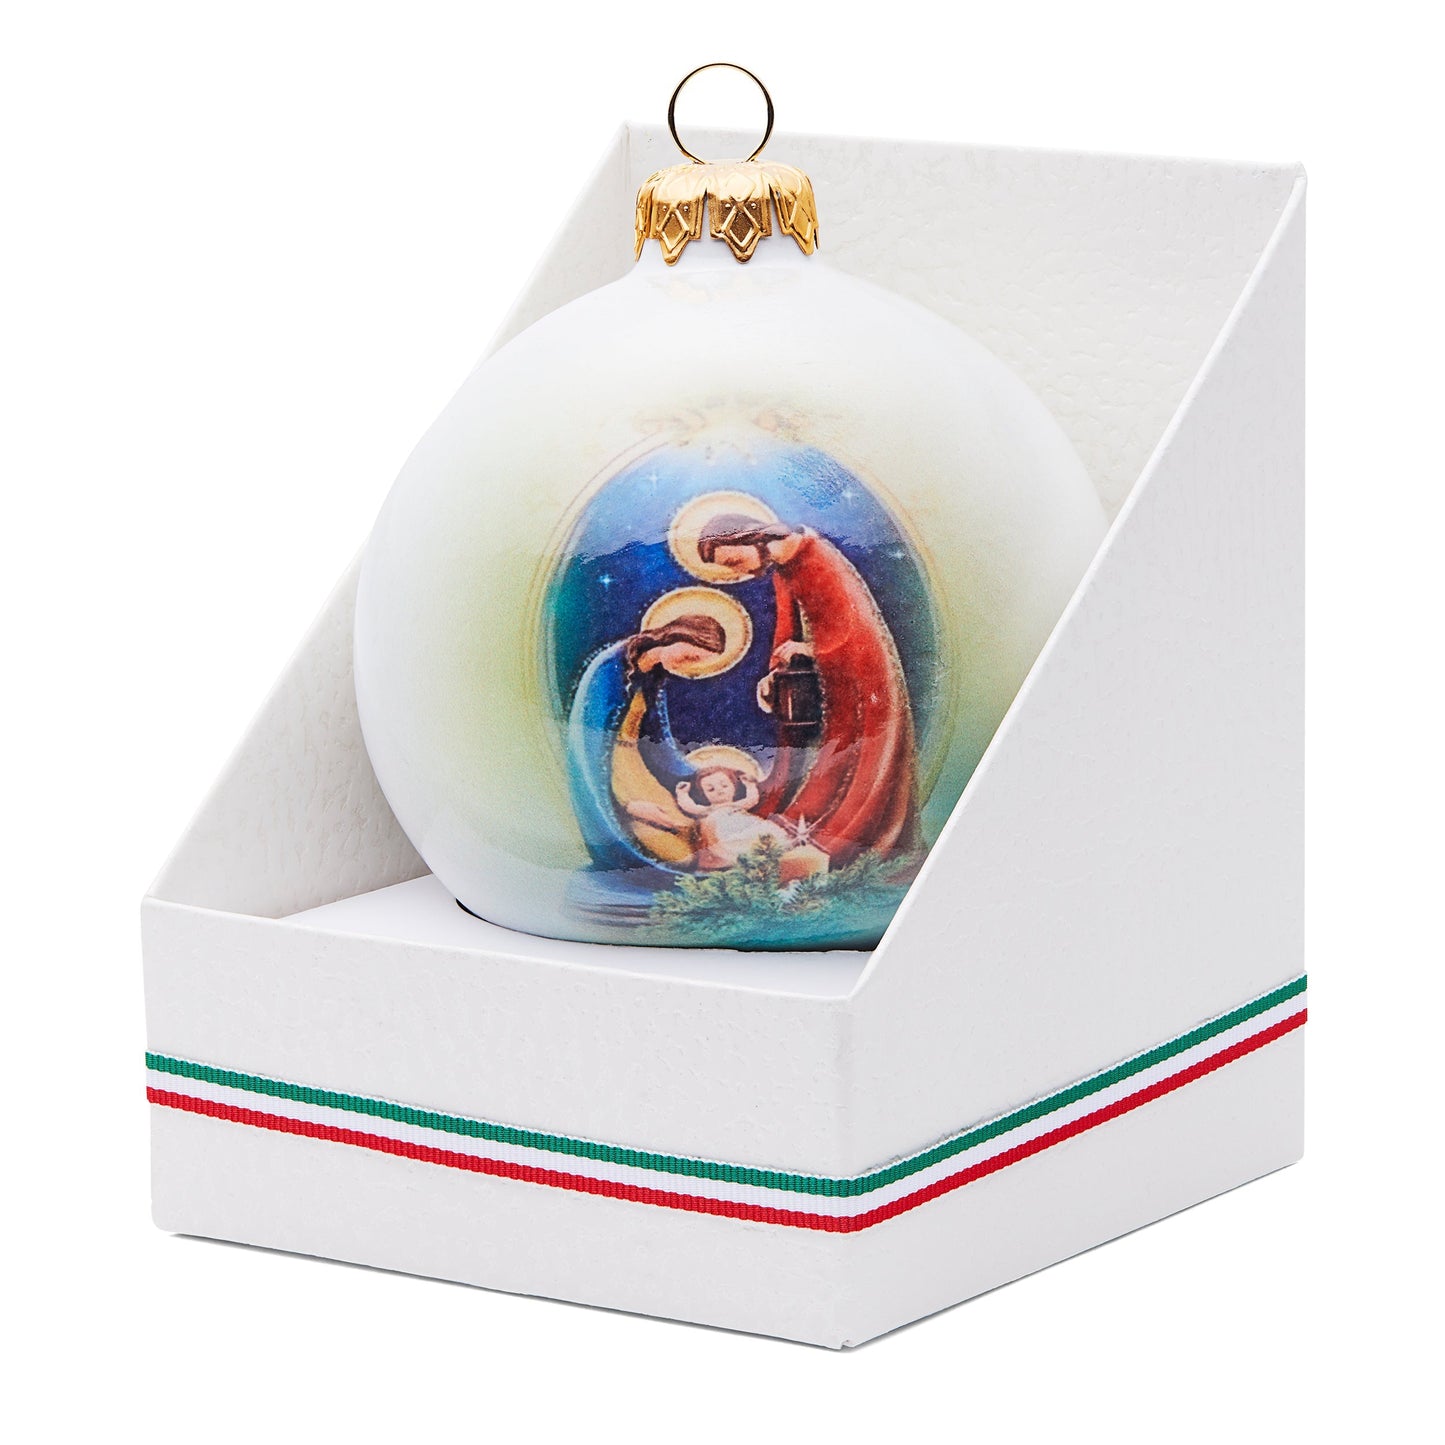 Mondo Cattolico Ceramic Christmas Ball With Nativity Scene